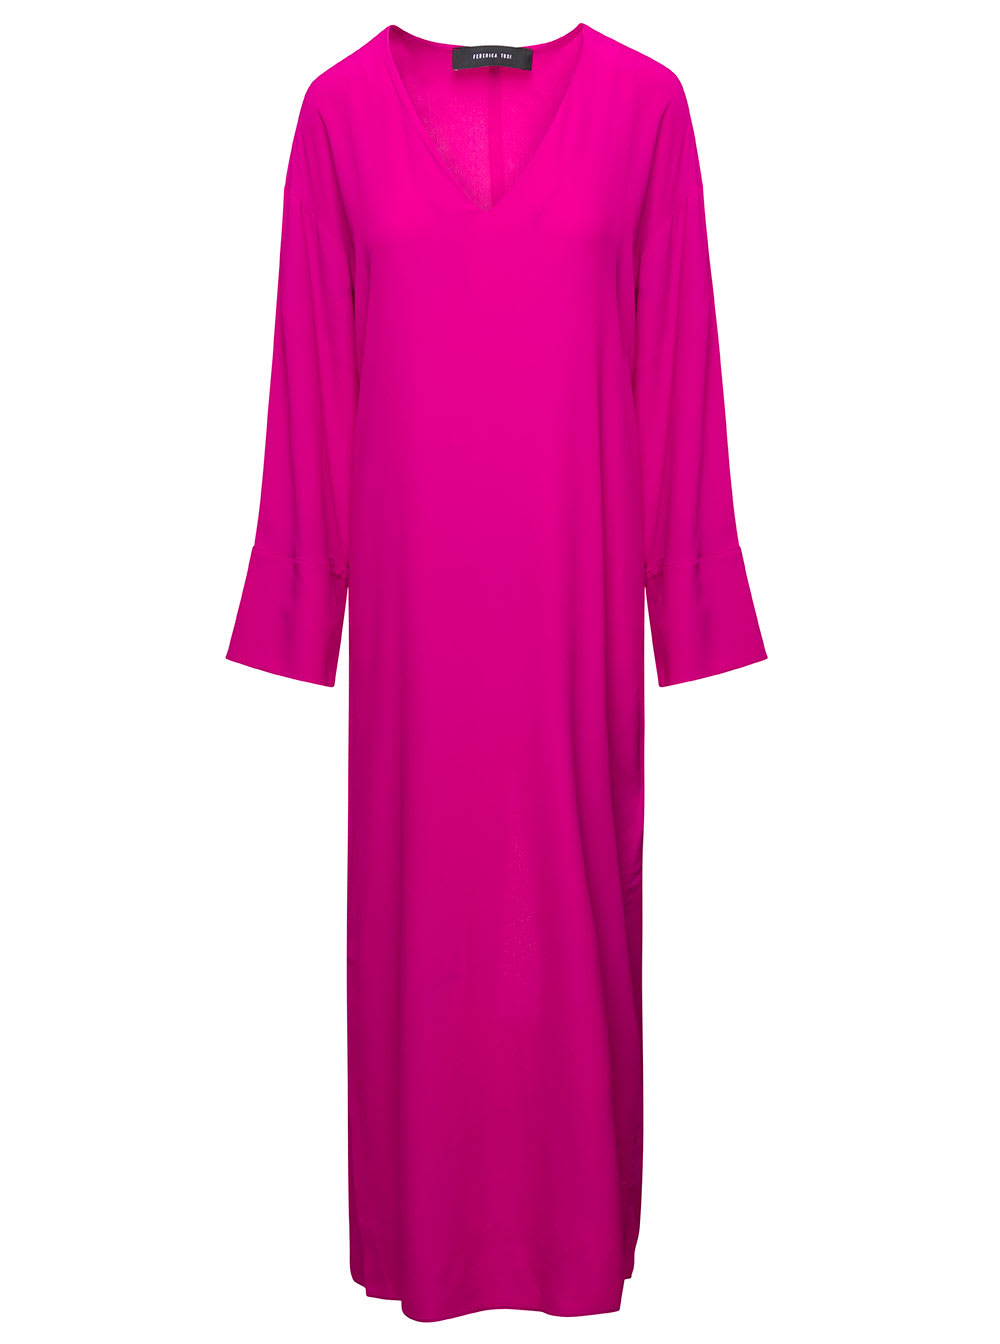 FEDERICA TOSI LONG FUCHSIA DRESS WITH V NECKLINE IN SILK BLEND WOMAN